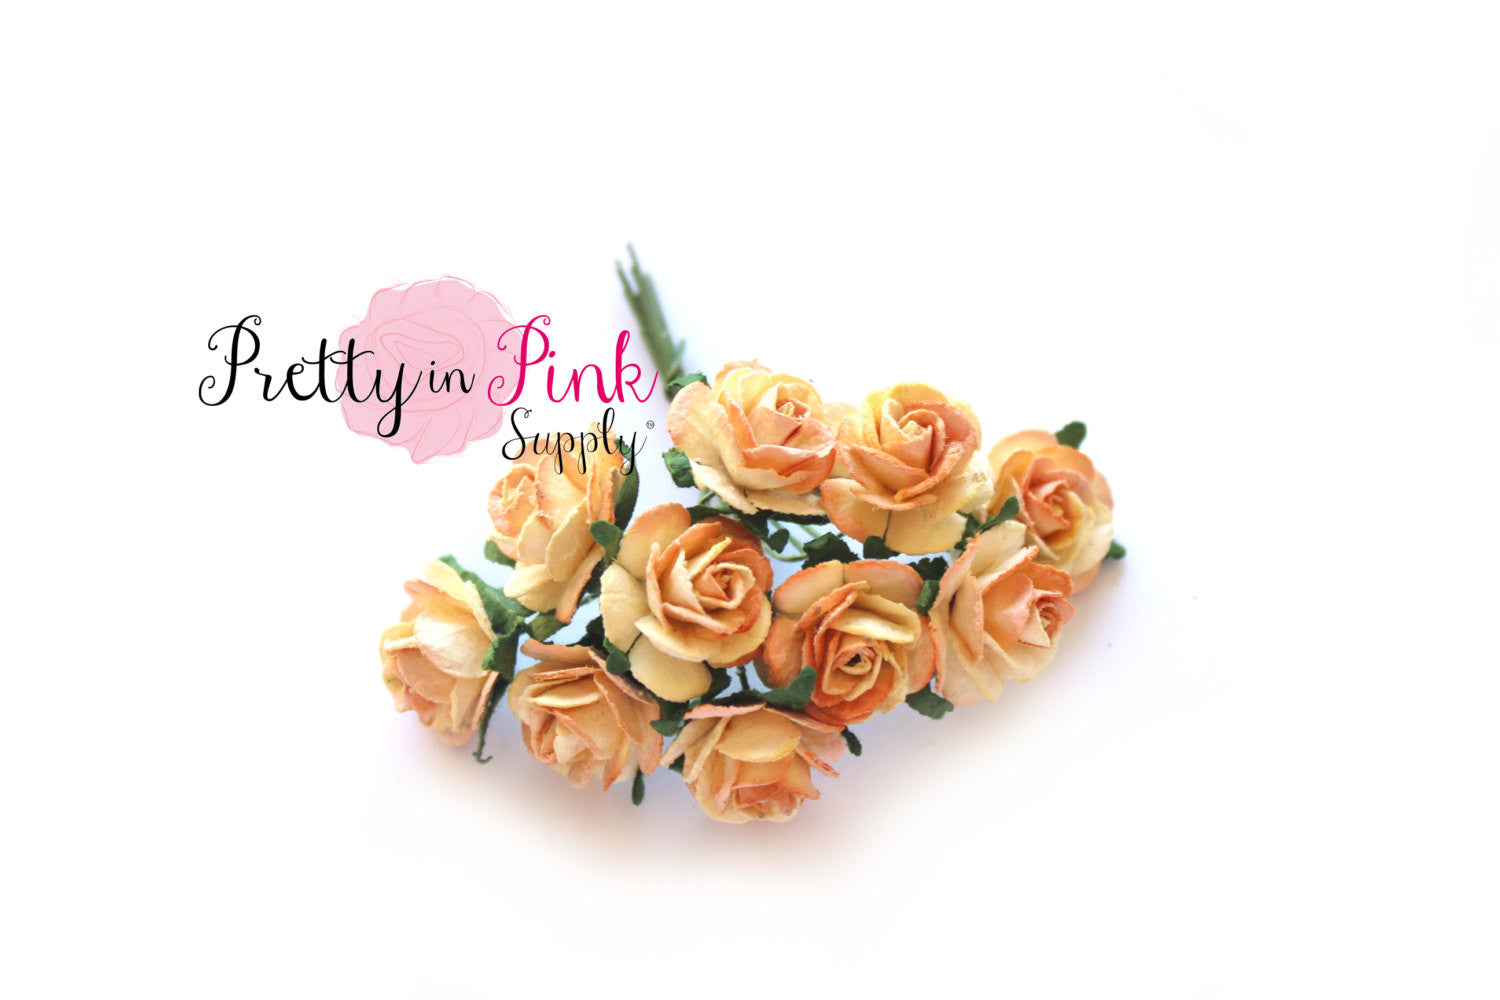 3/4" Cream/Light Peach Two Tone Premium Paper Flowers - Pretty in Pink Supply